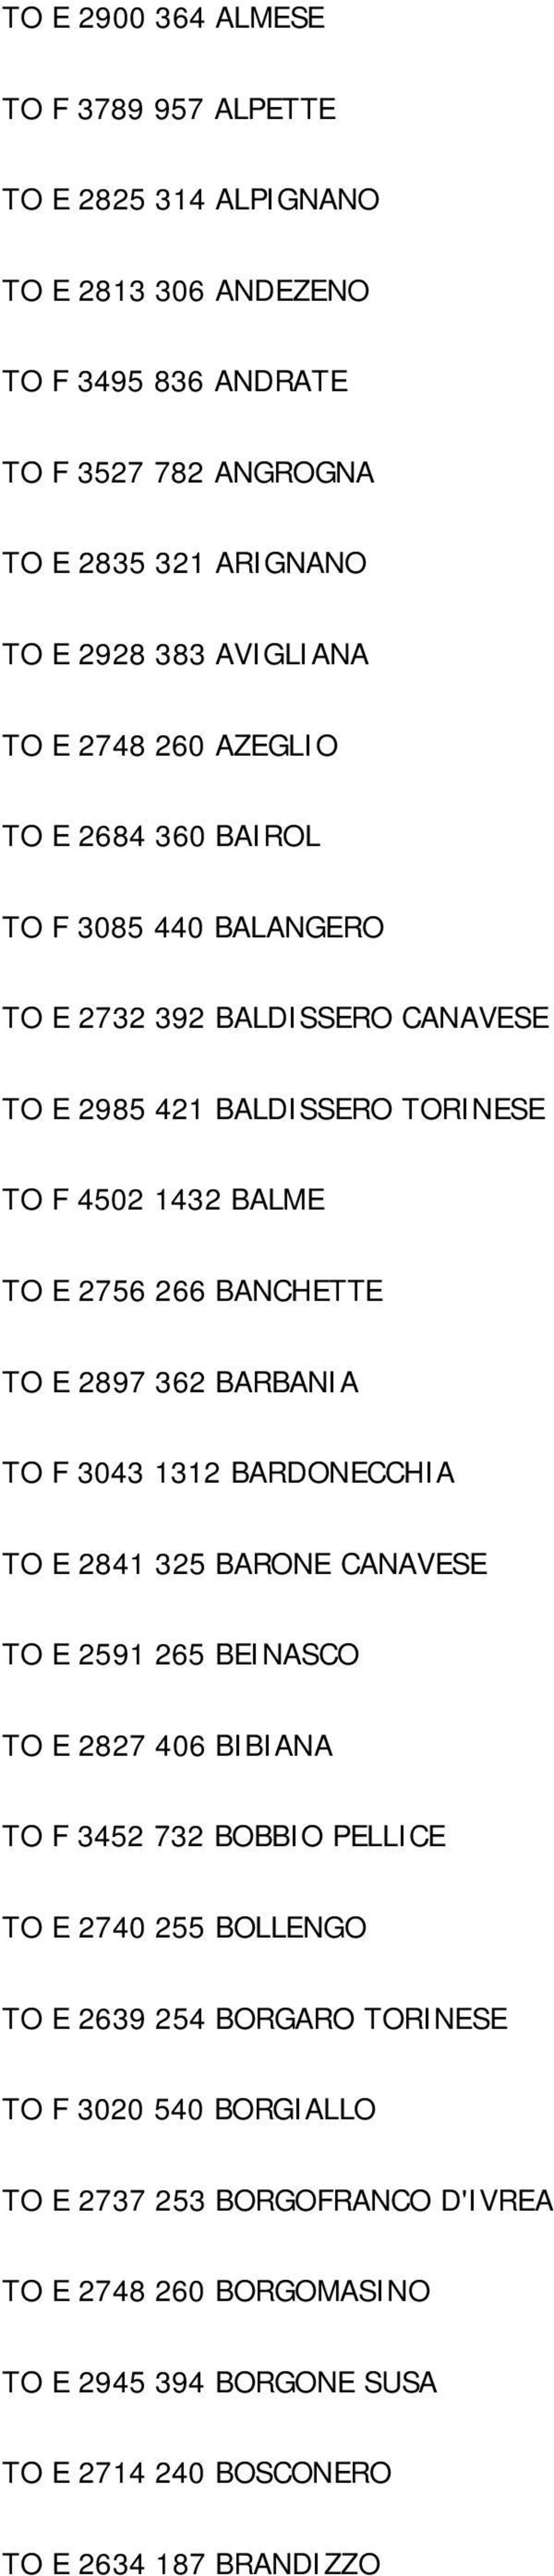 E 2897 362 BARBANIA TO F 3043 1312 BARDONECCHIA TO E 2841 325 BARONE CANAVESE TO E 2591 265 BEINASCO TO E 2827 406 BIBIANA TO F 3452 732 BOBBIO PELLICE TO E 2740 255 BOLLENGO TO E